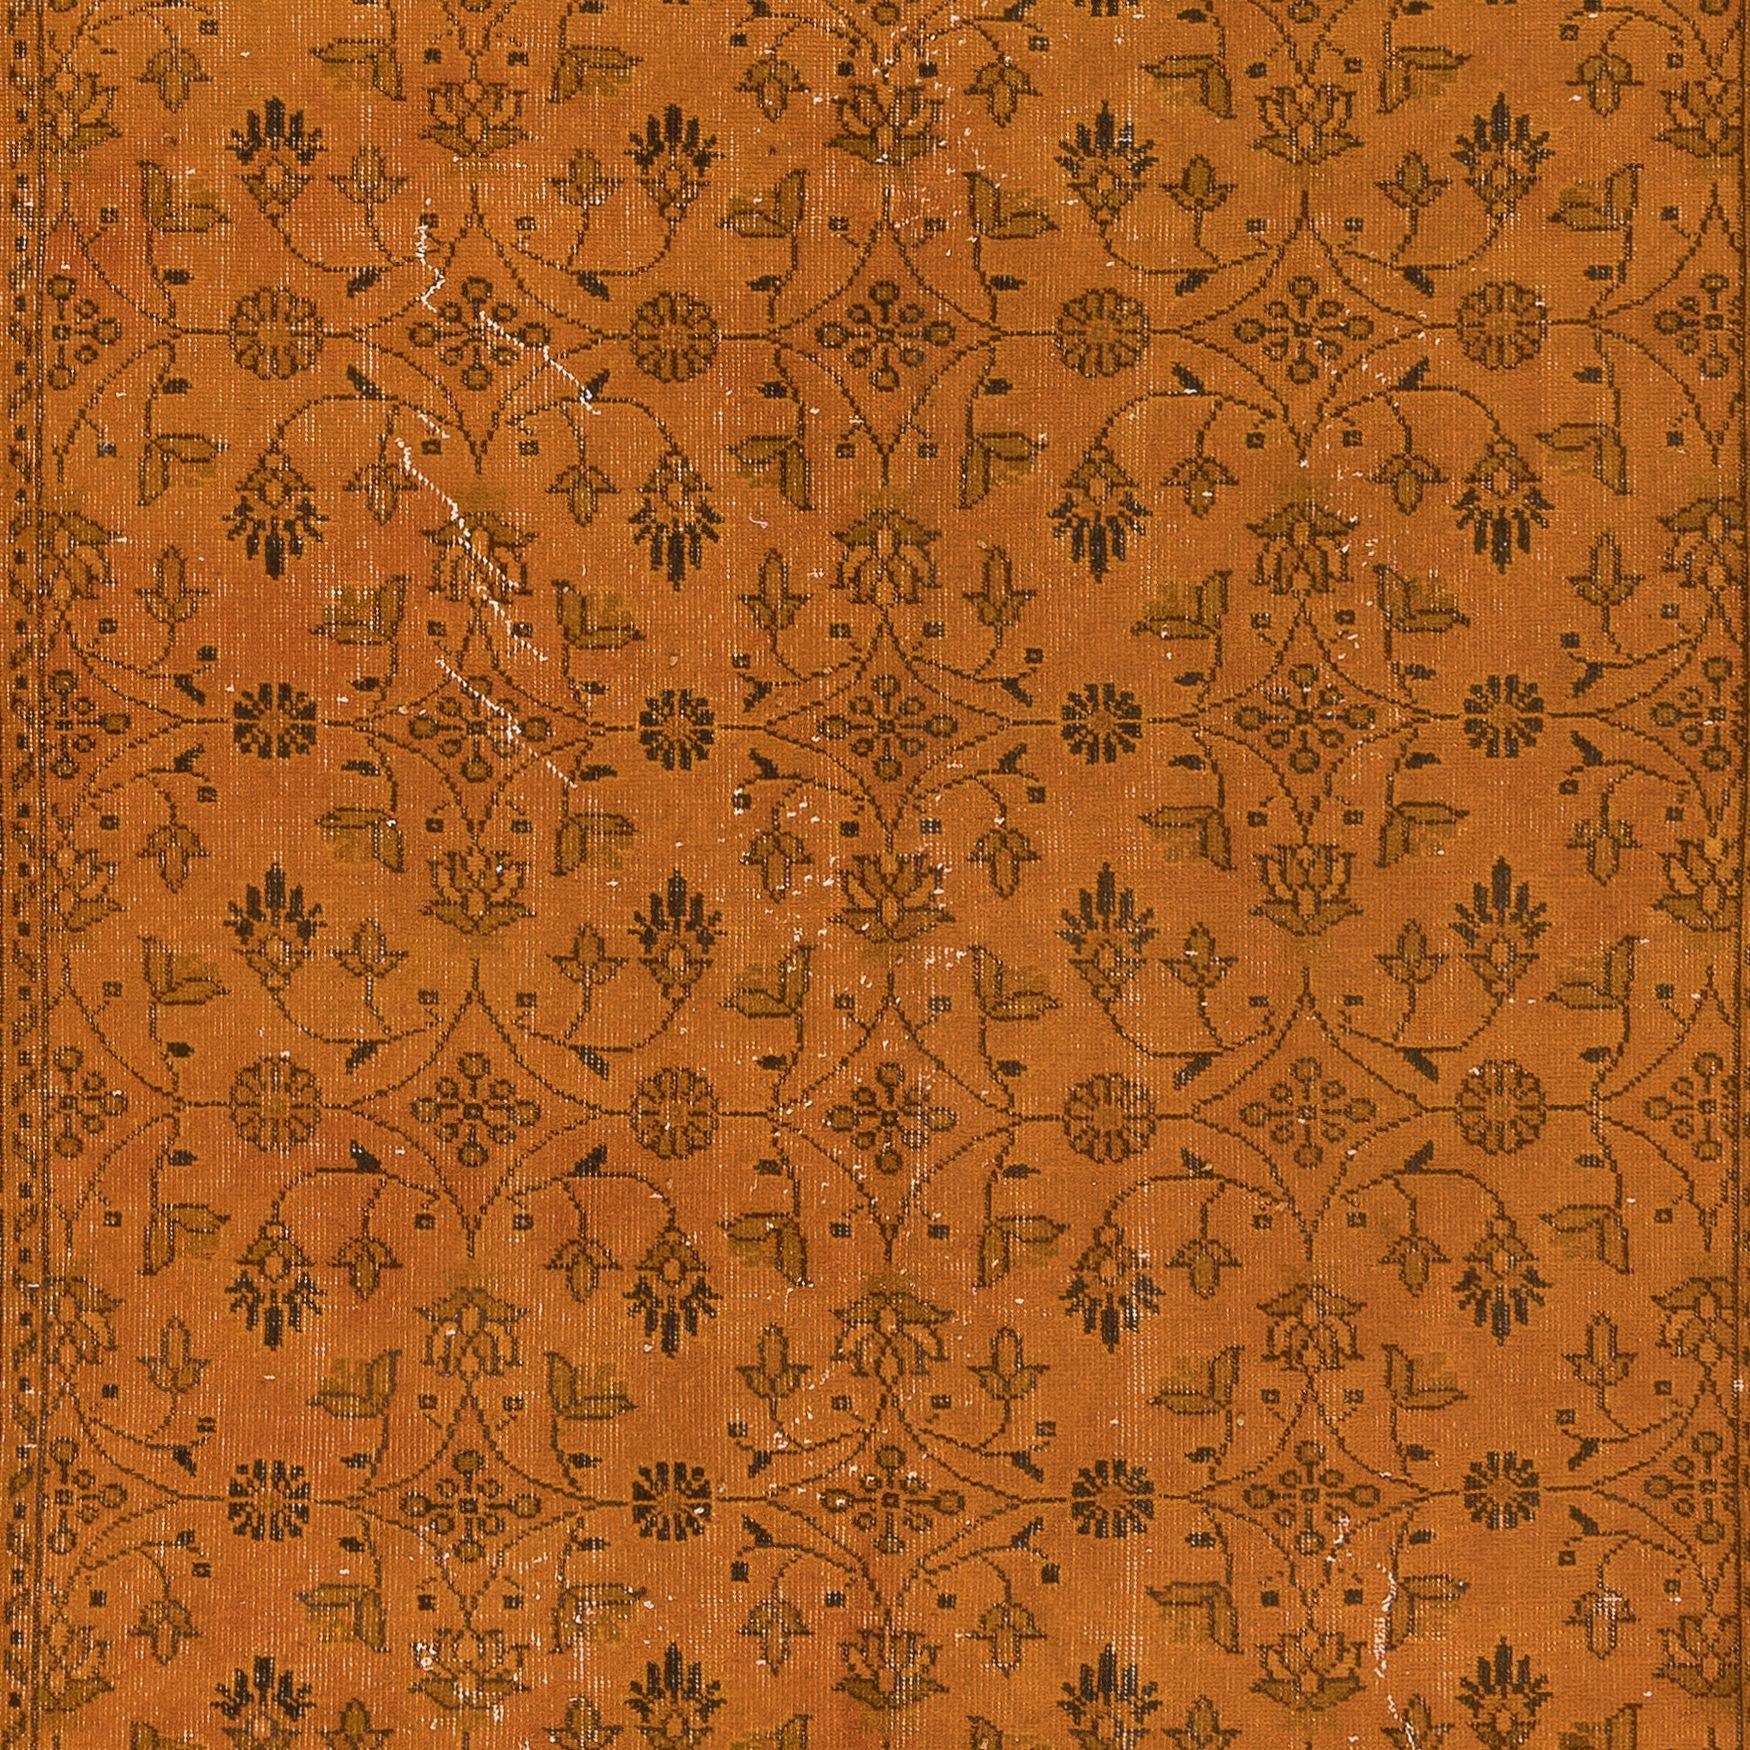 Modern 5.6x9.3 Ft Orange Handmade Turkish Rug with All-Over Botanical Design For Sale